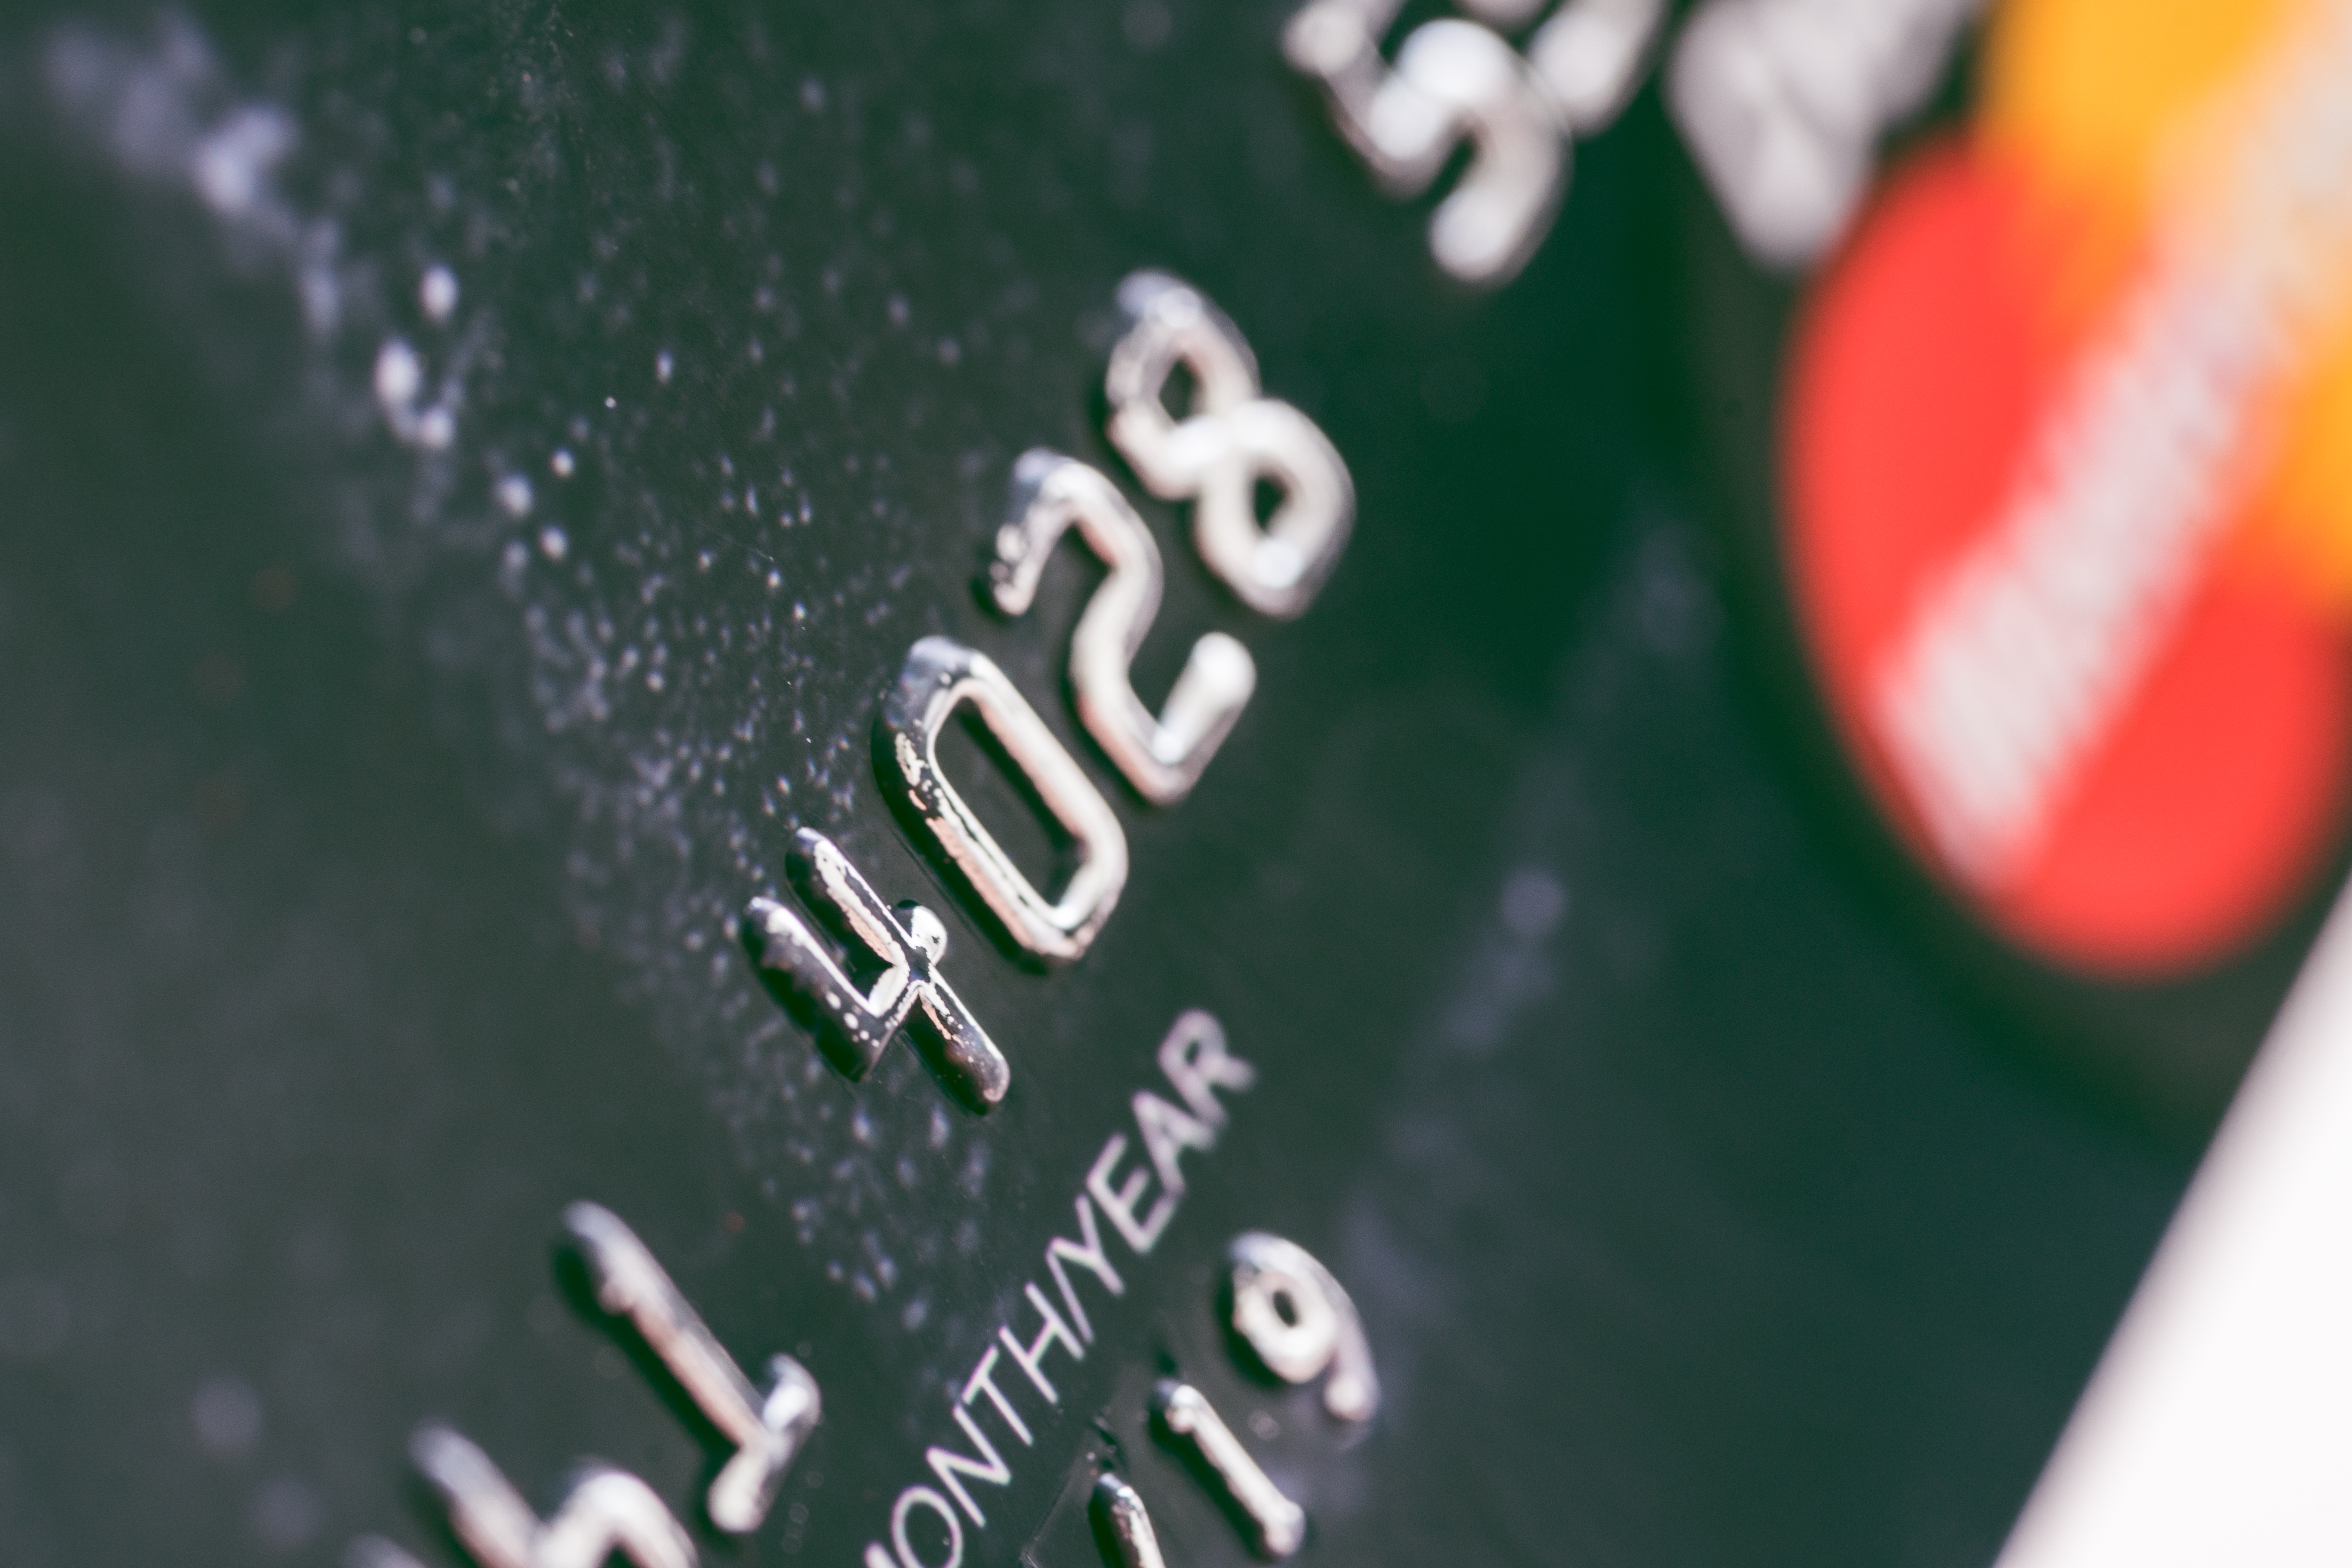 debit-card-bank-numbers-close-up-picjumbo-com